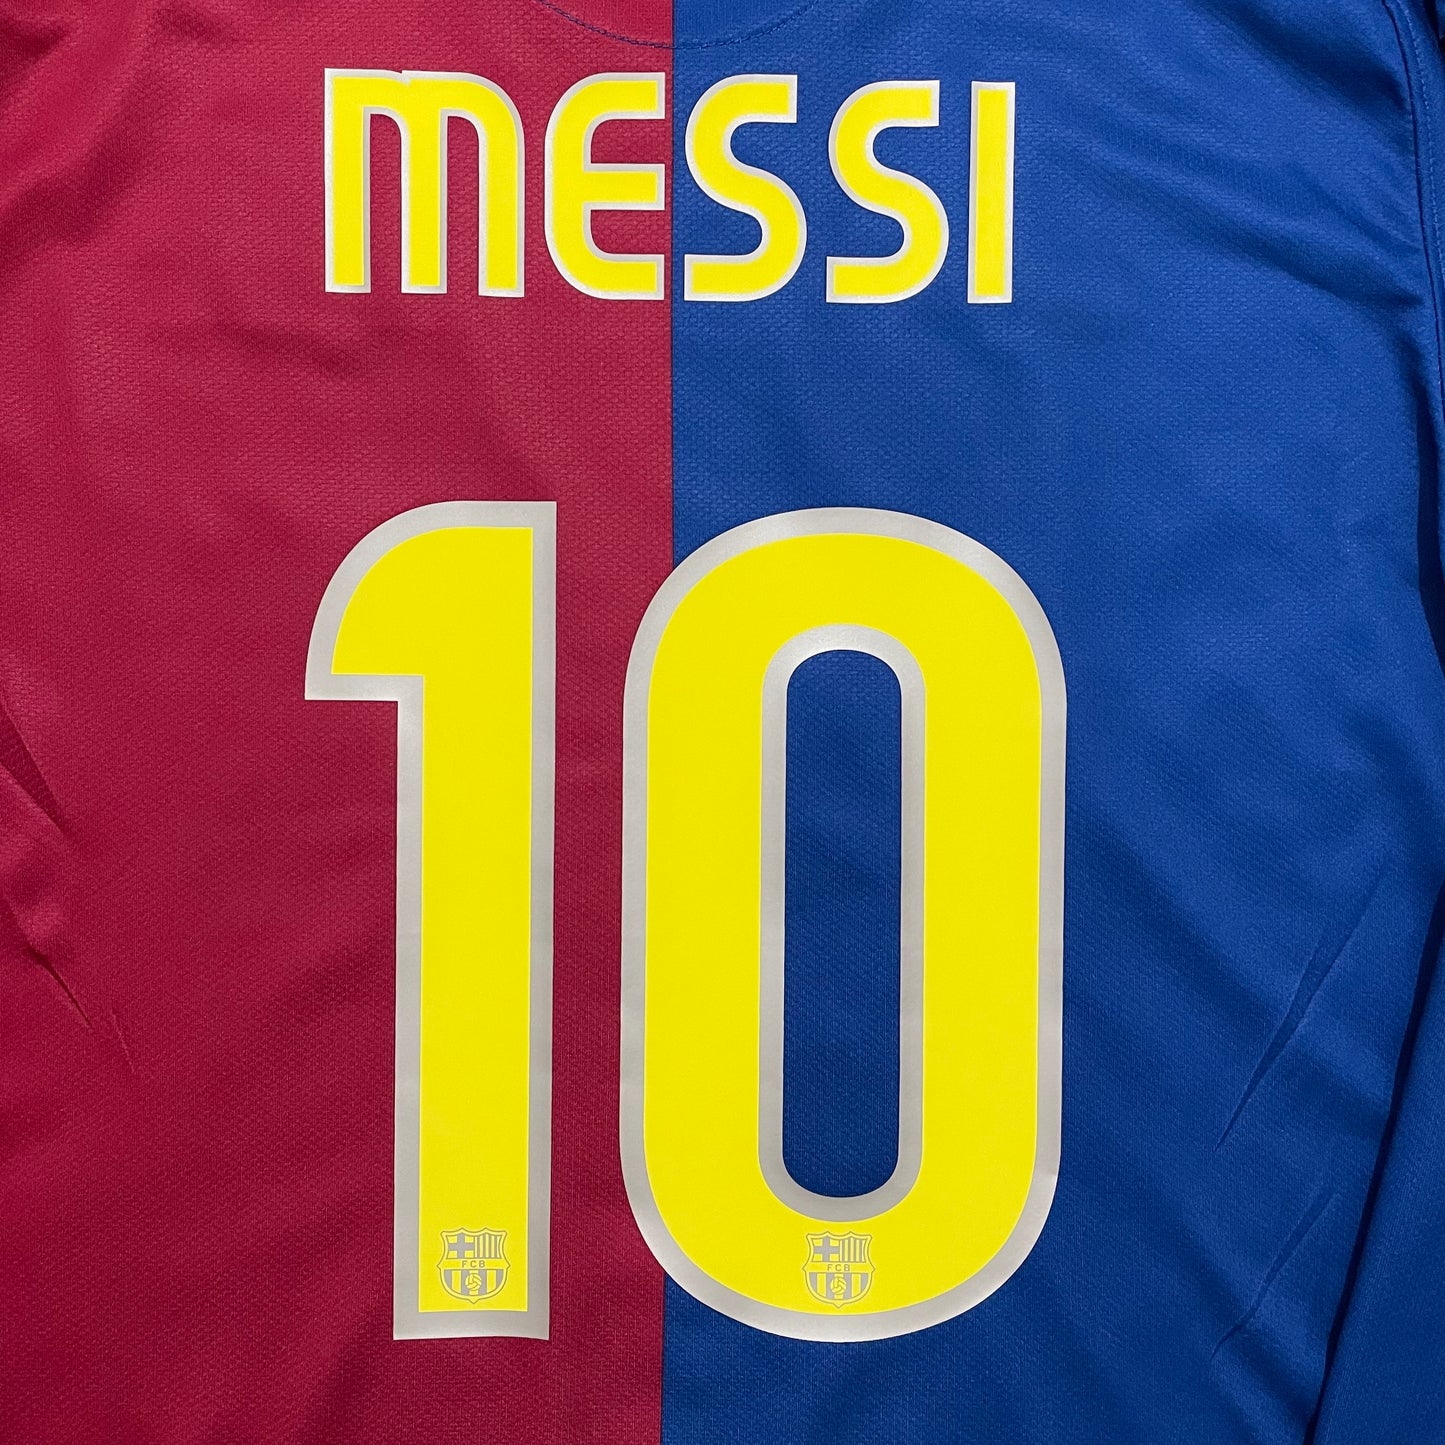 2008-2009 FC Barcelona home shirt #10 Messi (M)